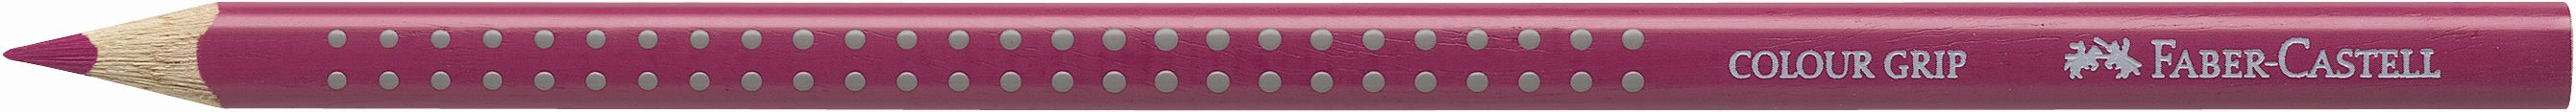 Barvica Color Grip / 125 purpurno roza